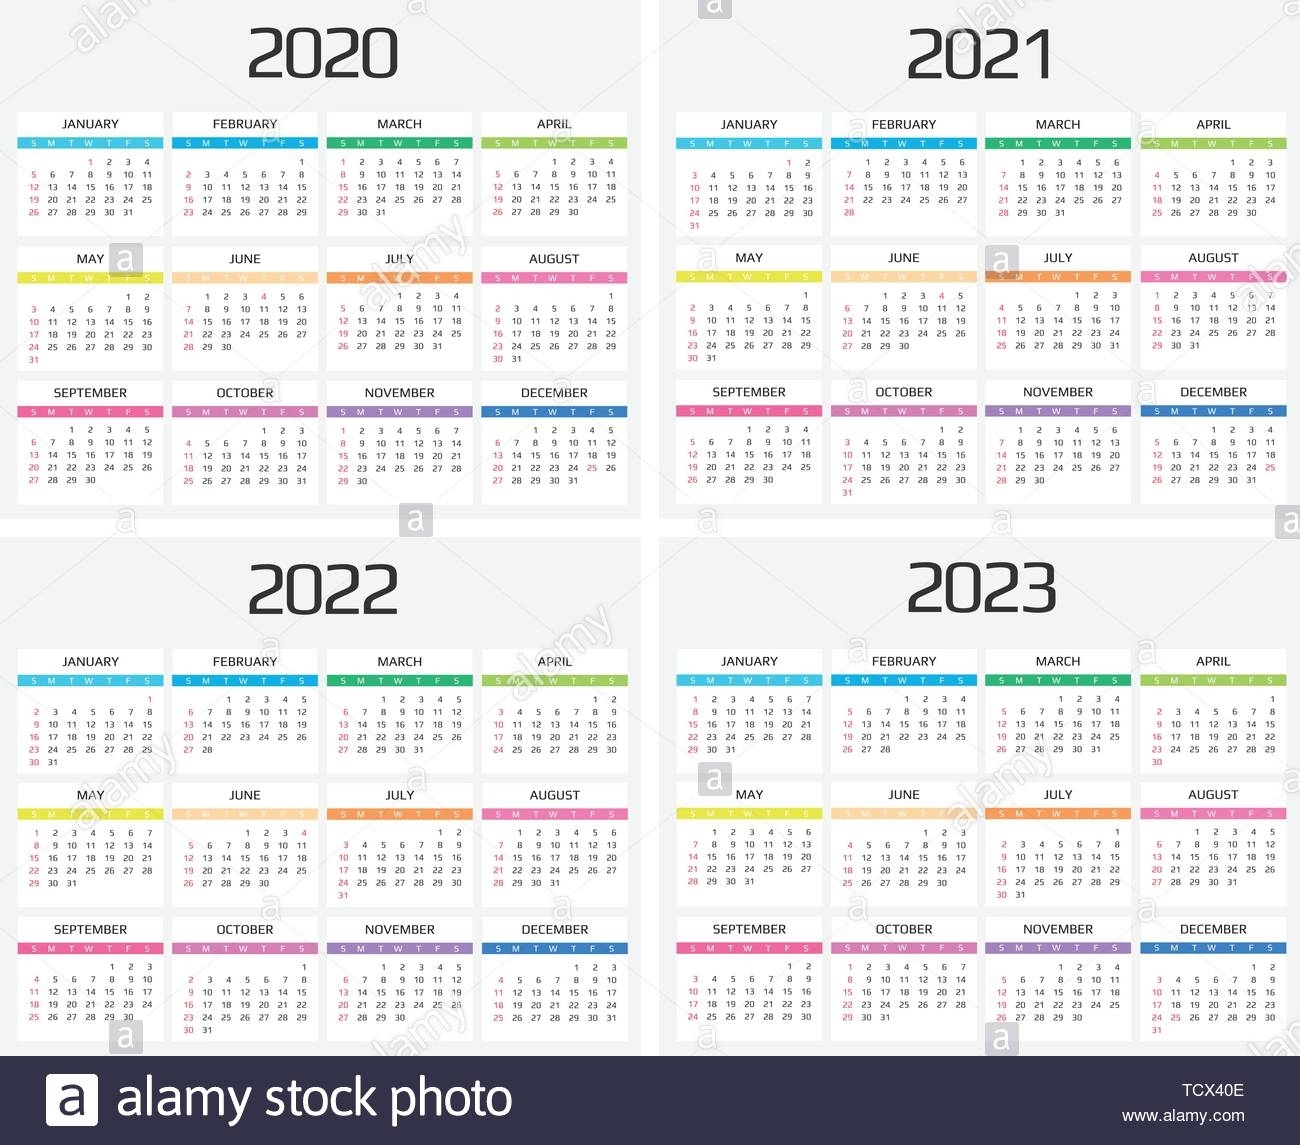 Calendar 2020, 2021, 2022, 2023 Template. 12 Months. Include for 2019 2020 2021 2022 2023 Year Calendar Printable